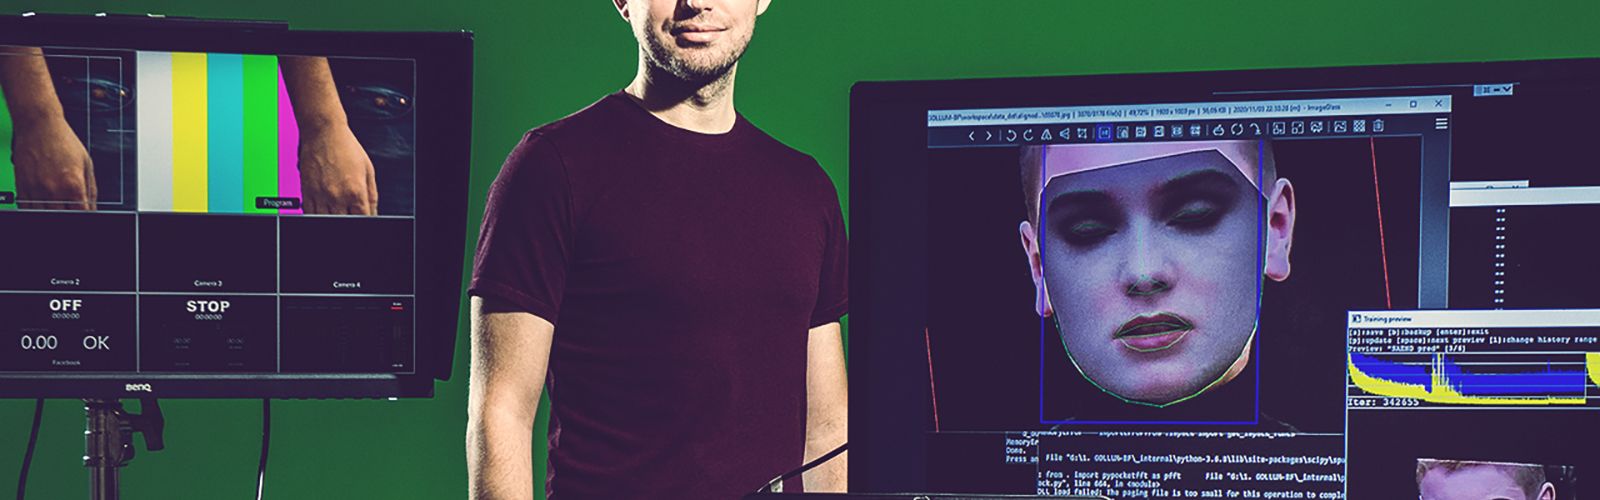 1600px x 500px - How a deepfake Tom Cruise on TikTok turned into a very real AI company |  CNN Business